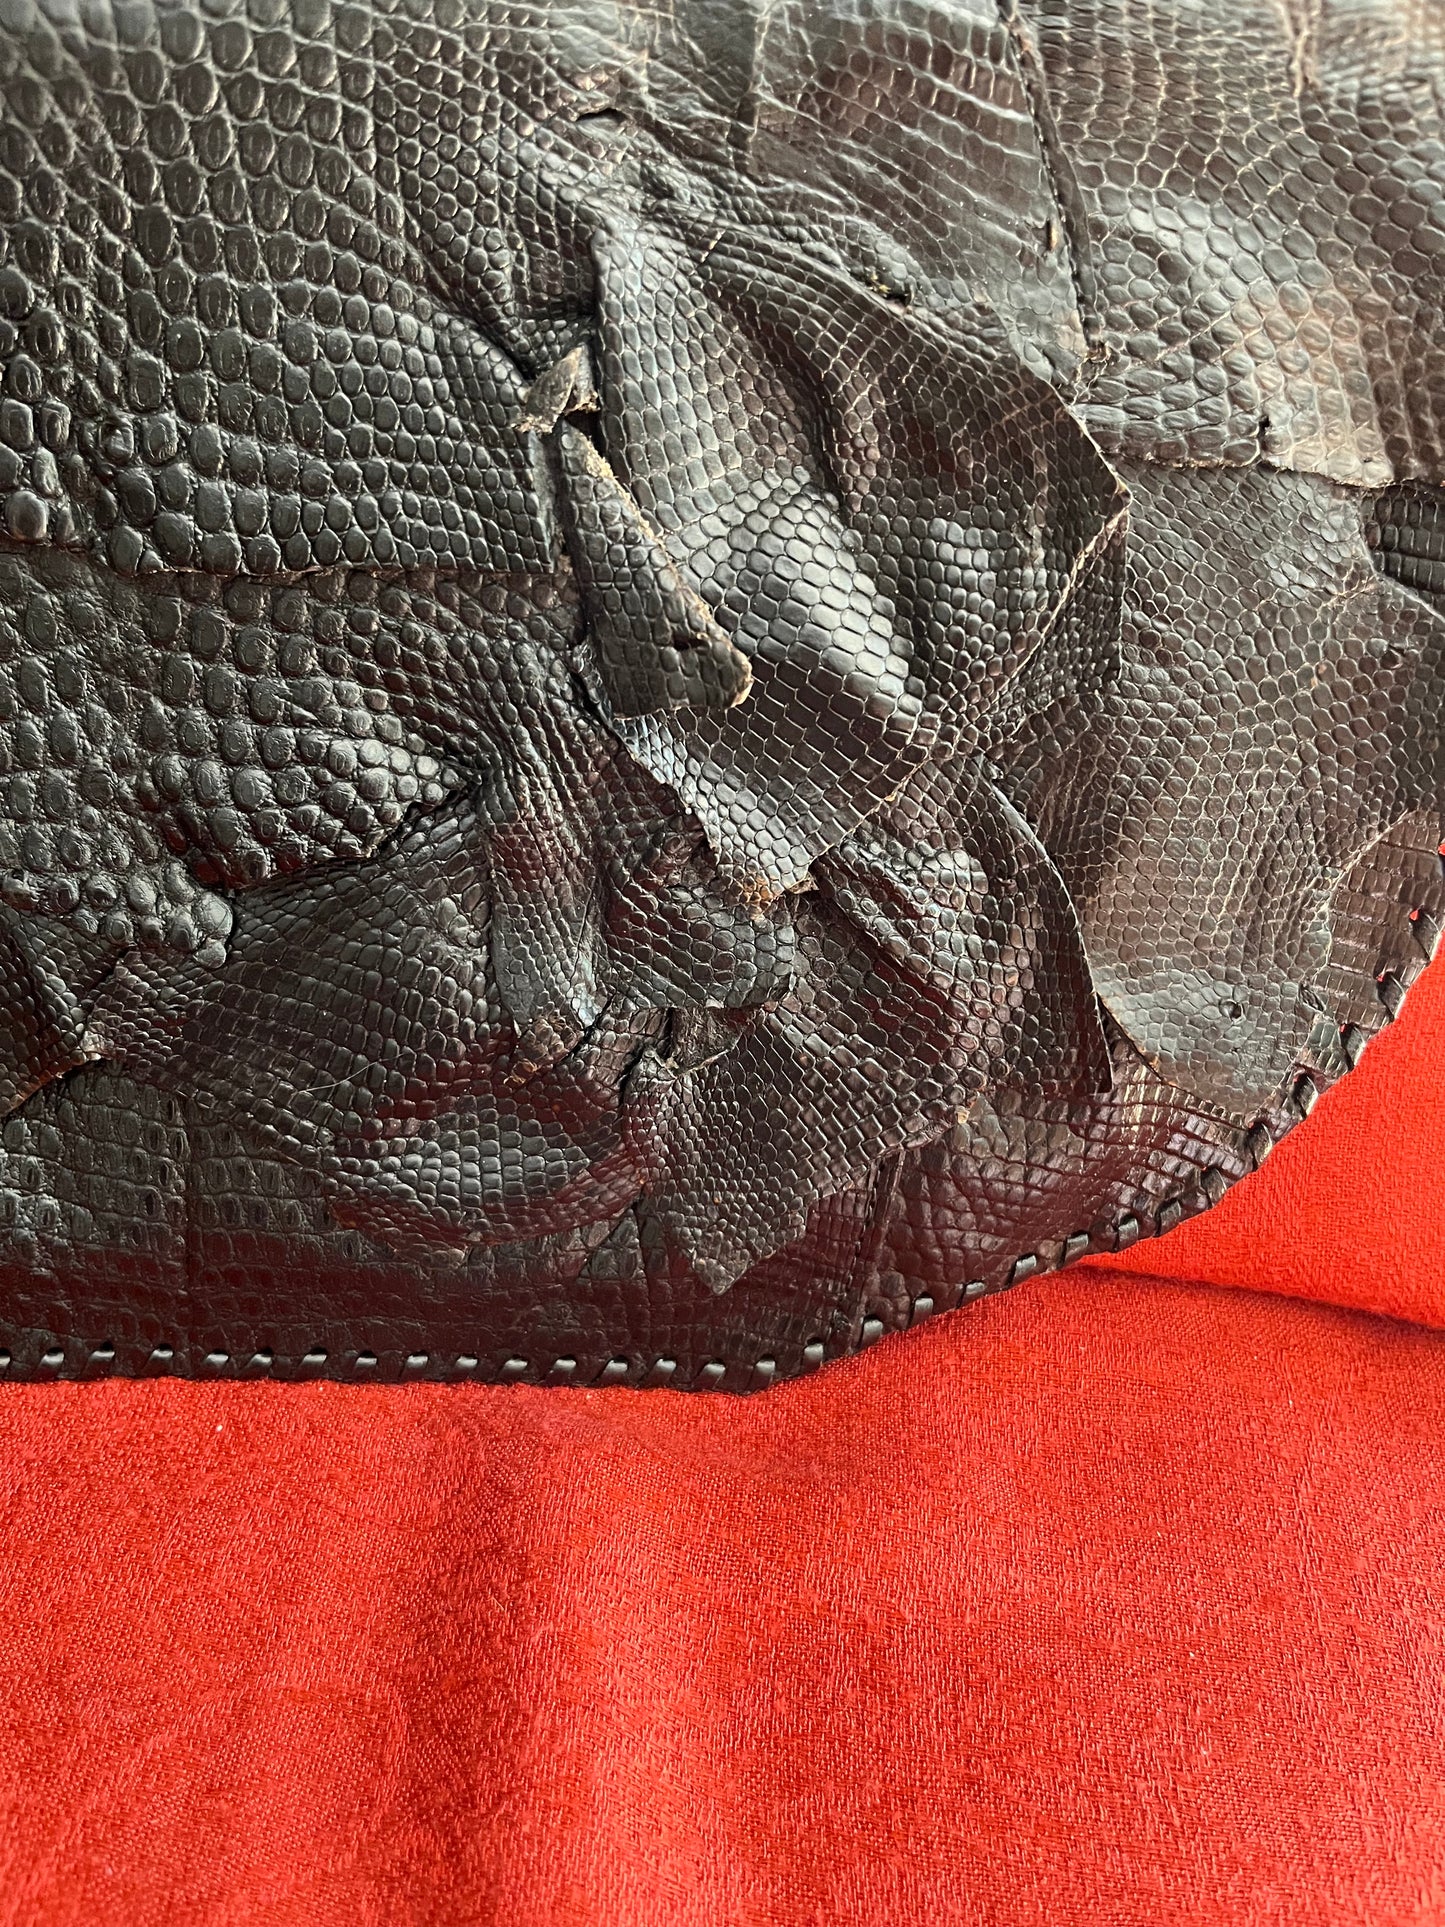 Vintage Ann Turk Lizard Leather Envelope Clutch